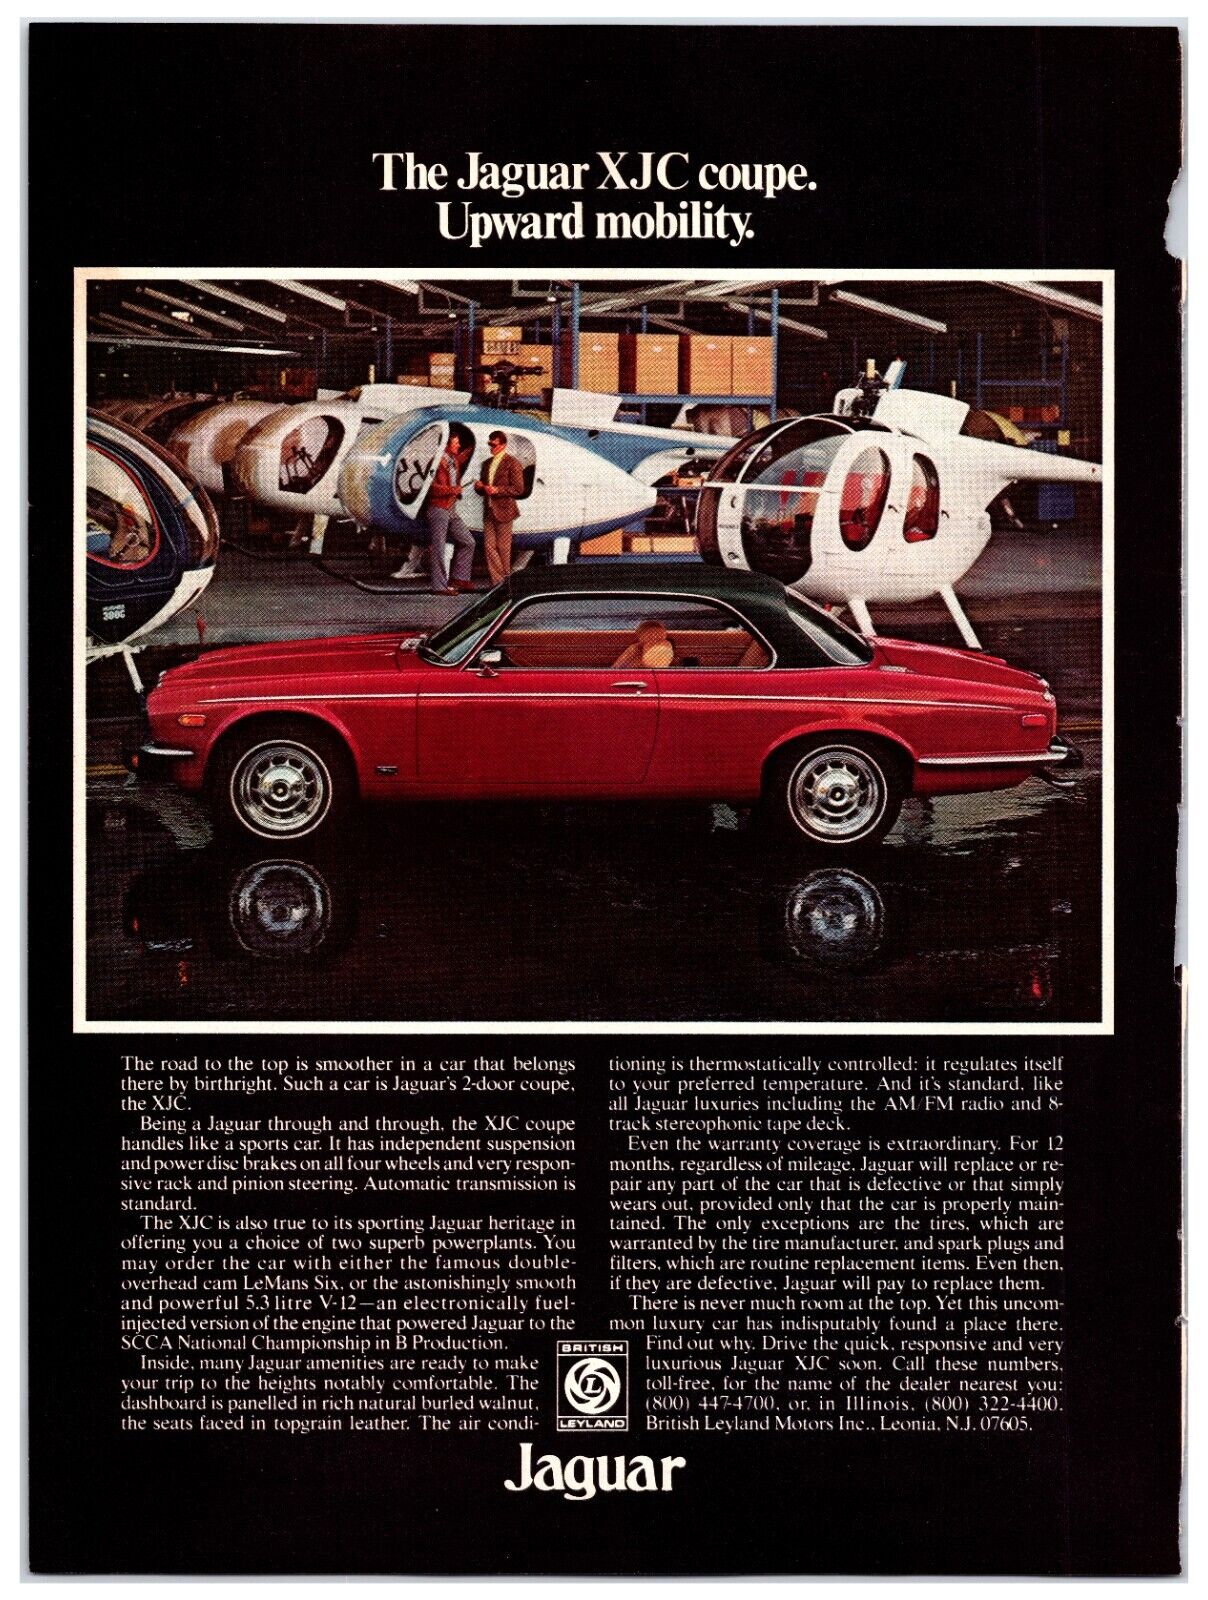 Original 1976 Jaguar XJC Car - Original Print Advertisement (8x11)